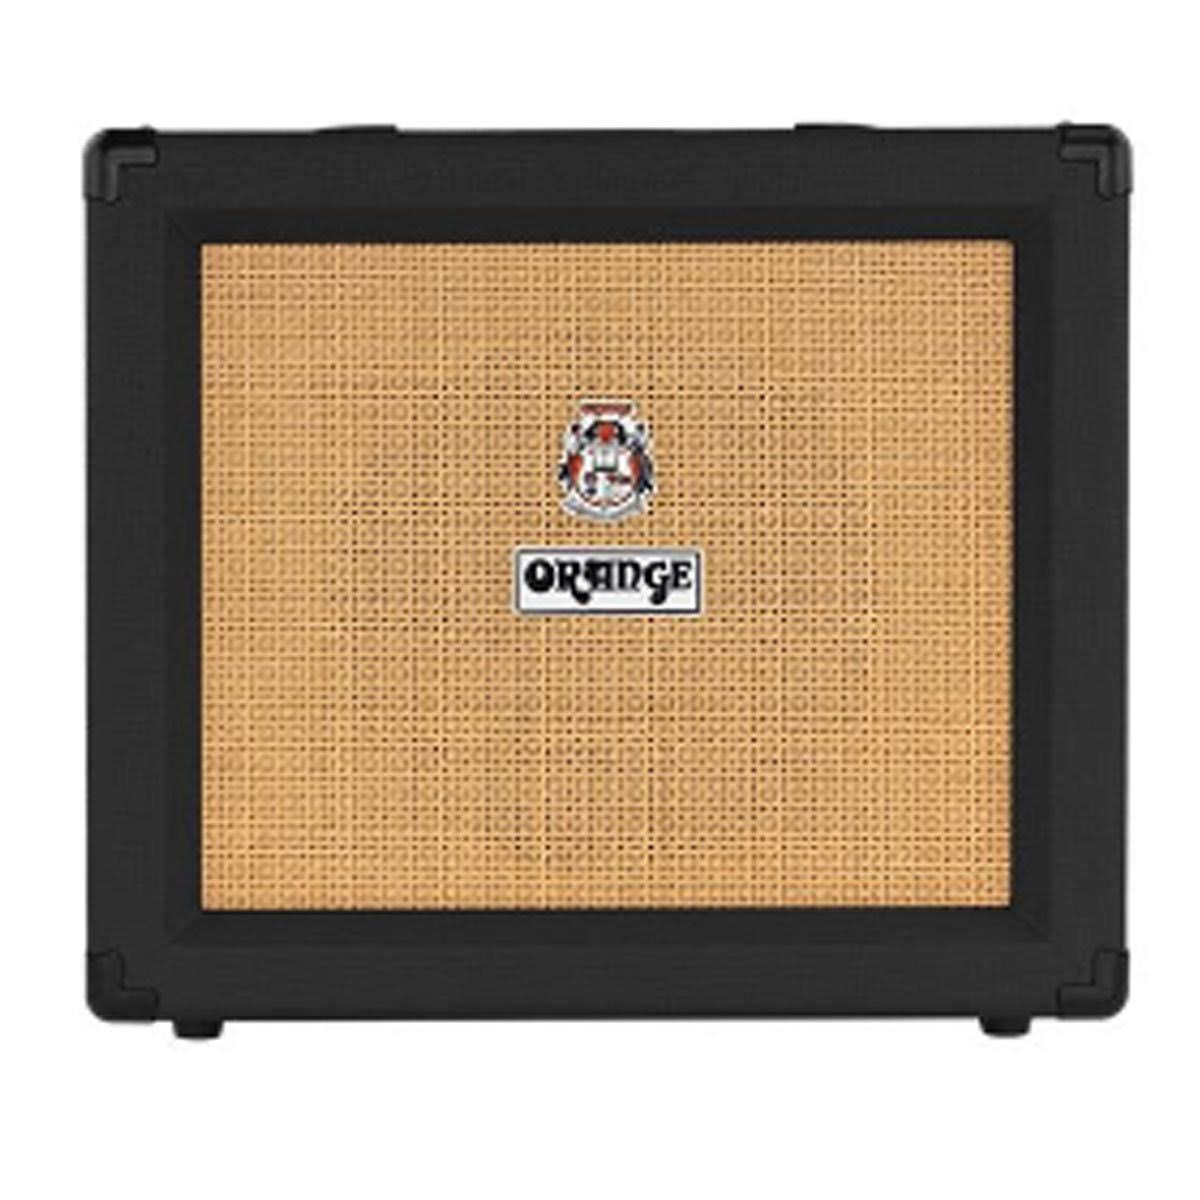 Orange Crush 35rt Guitar Combo Amplifier - Black